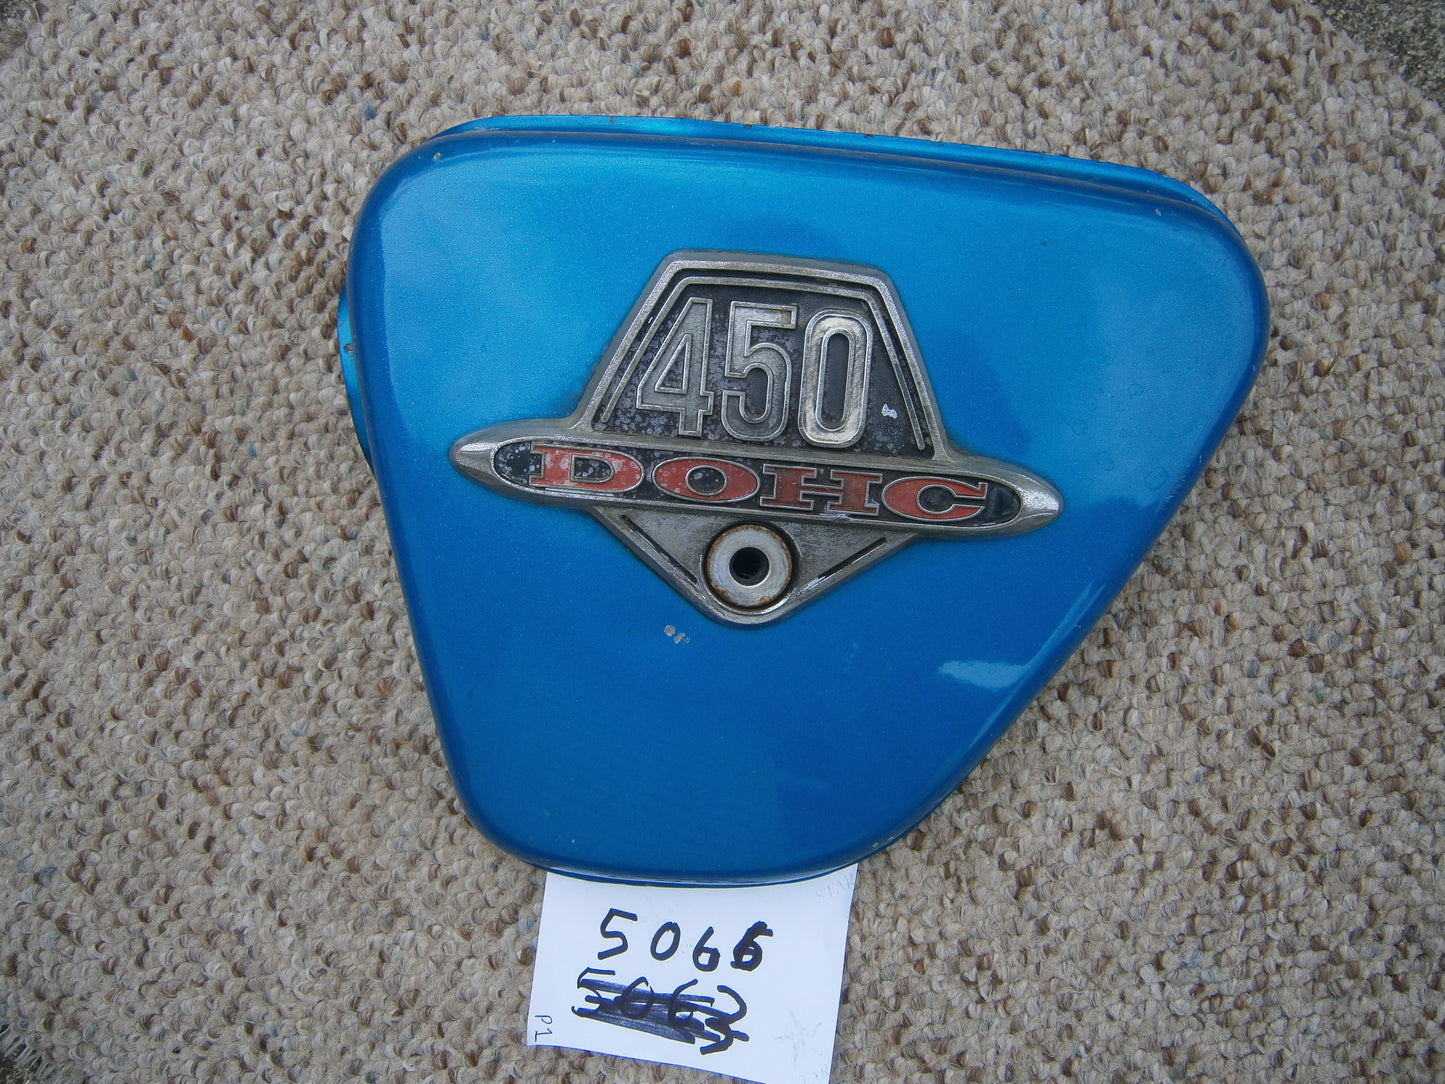 Sold Ebay 10/25/19 Honda CL450K2 K3 Sidecover Left Candy Blue Green 5066